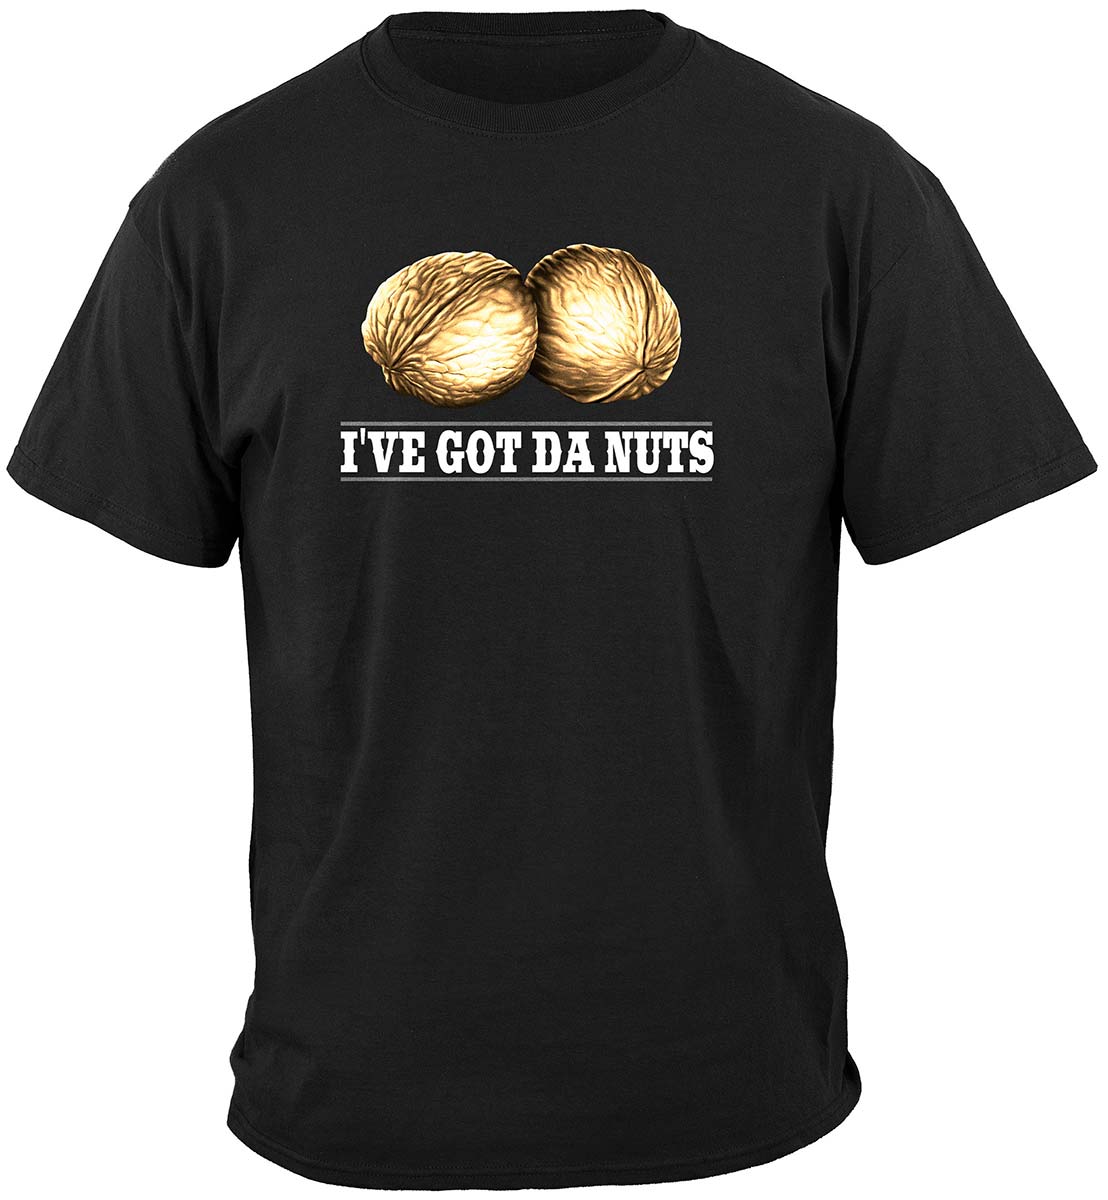 The Nutz Premium Hooded Sweat Shirt